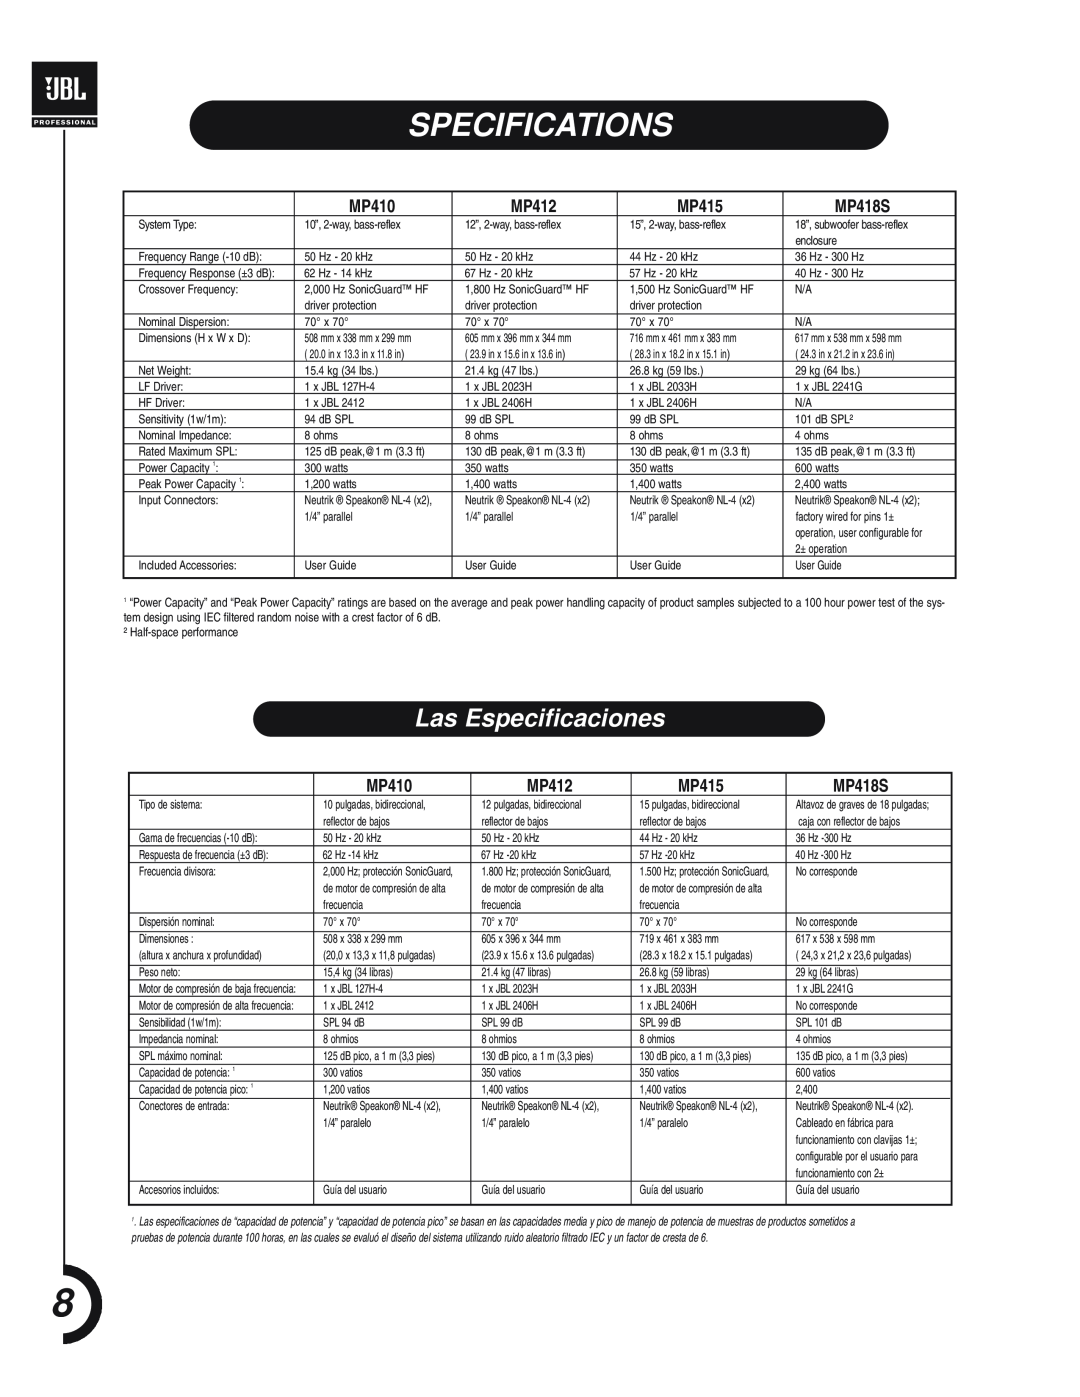 JBL MPro 400 manual Specifications, Las Especificaciones, MP410, MP412, MP415, MP418S 